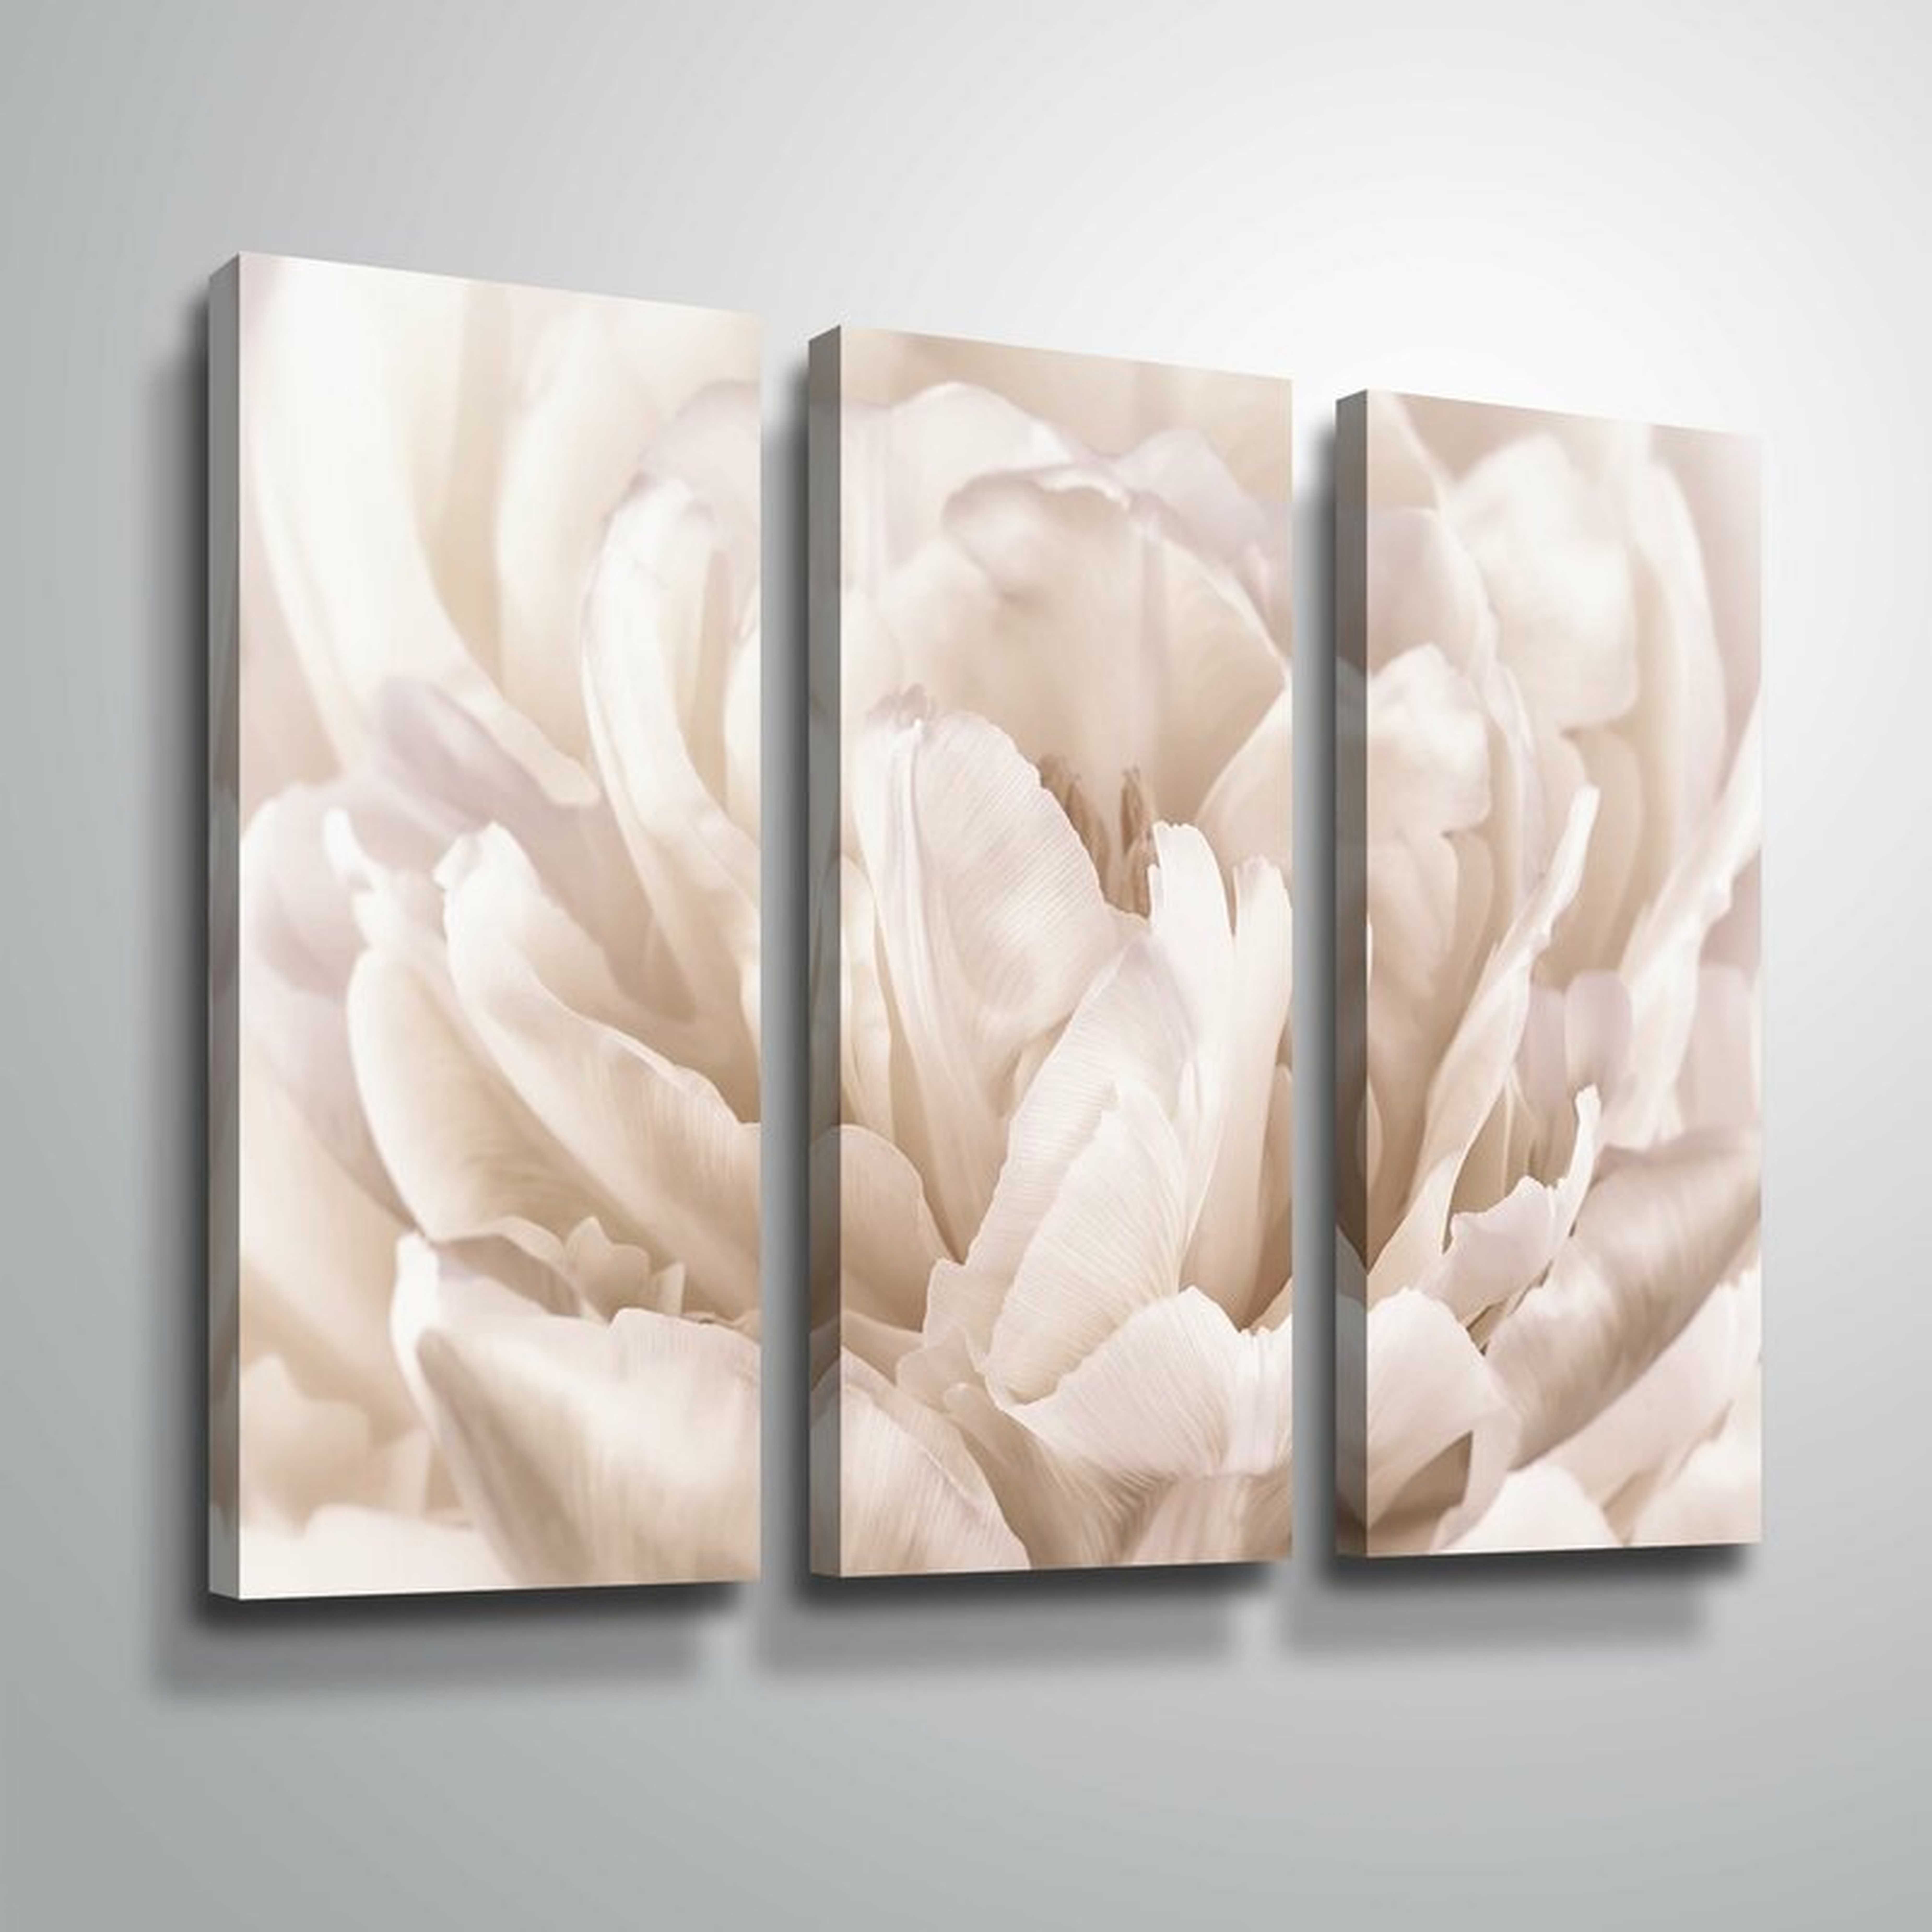 36" H x 54" W x 2" D 'Double White Tulip' Photographic Print Multi-Piece Image on Canvas - Wayfair